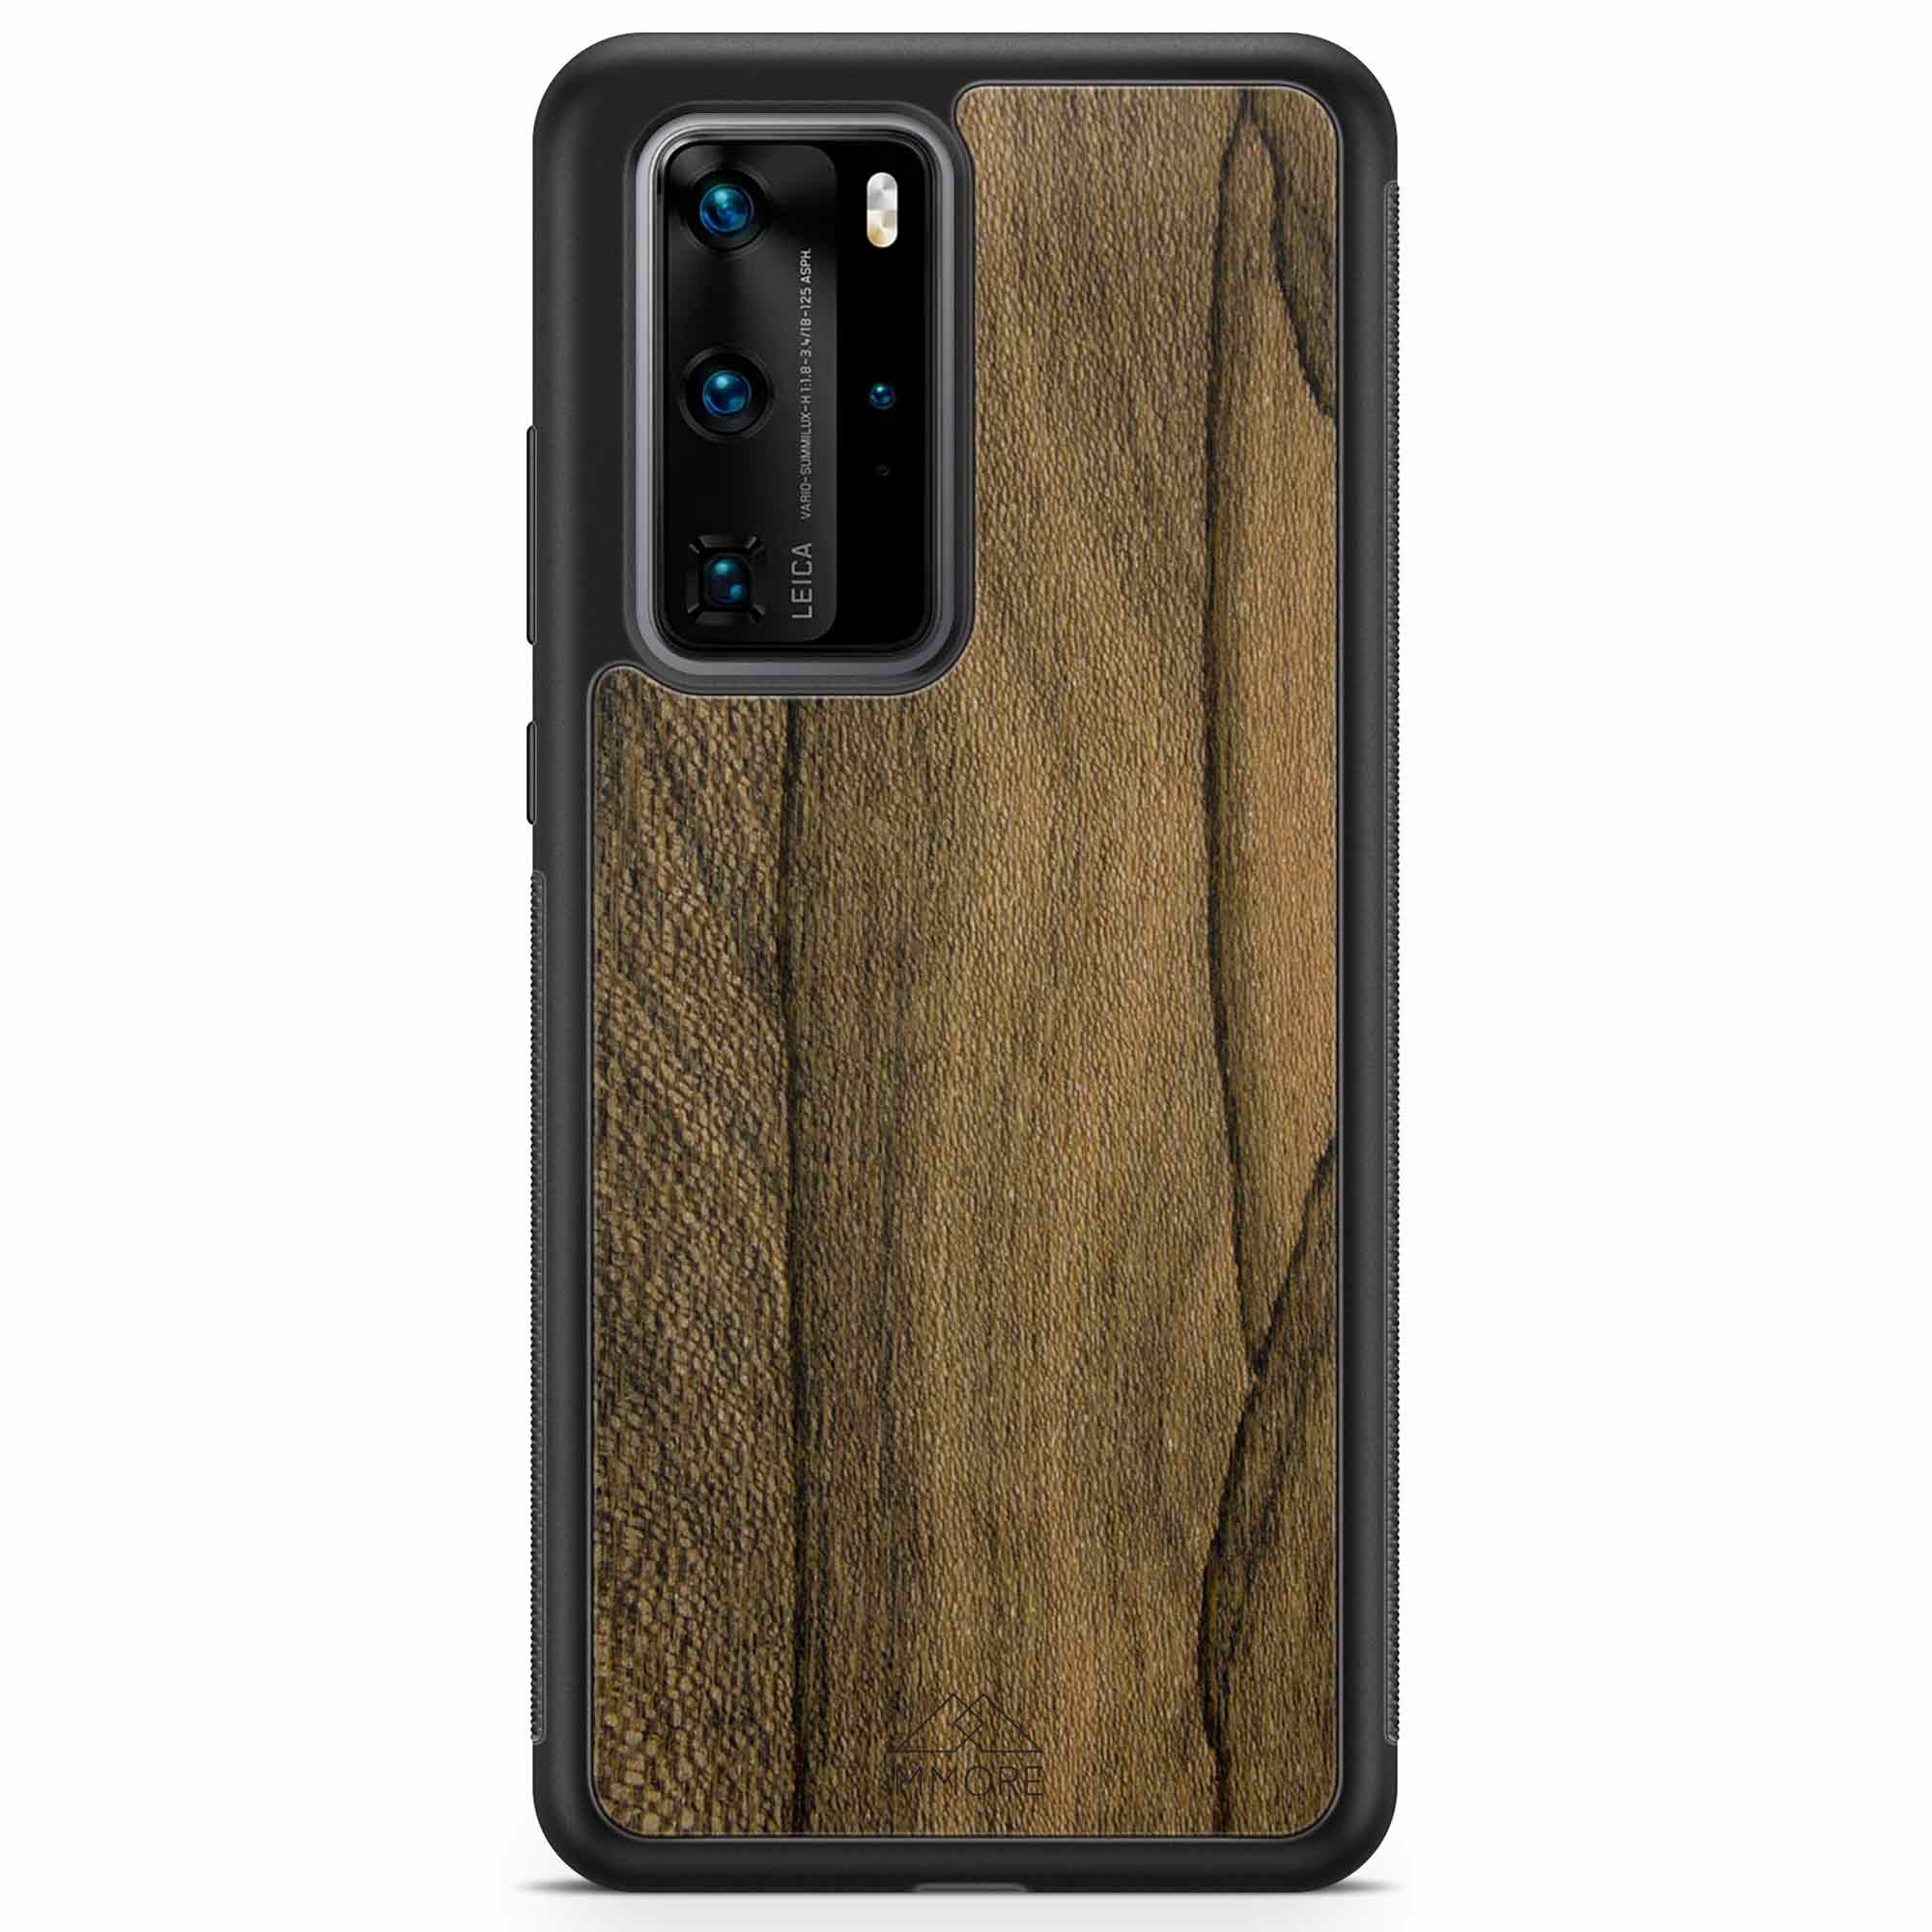  Ziricote Wood Huawei P40 Pro Phone Case 